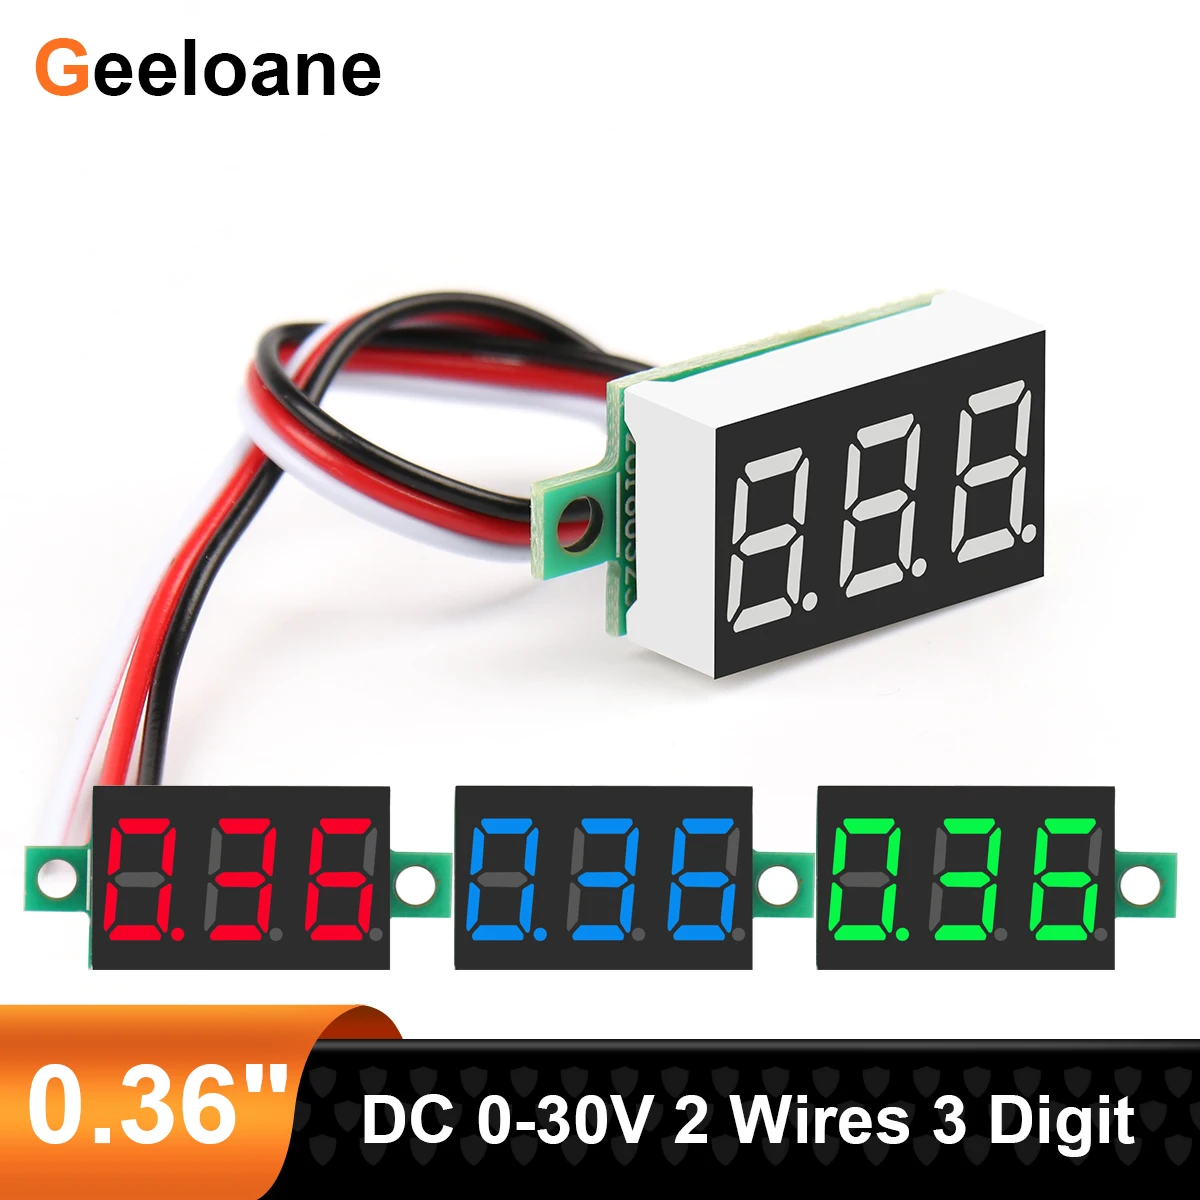 

0.36" Mini LED Digital Voltmeter DC 0-30V 2 Wires 3 Digit Voltage Panel Meter Display Meter DIY Reverse Polarity Protection